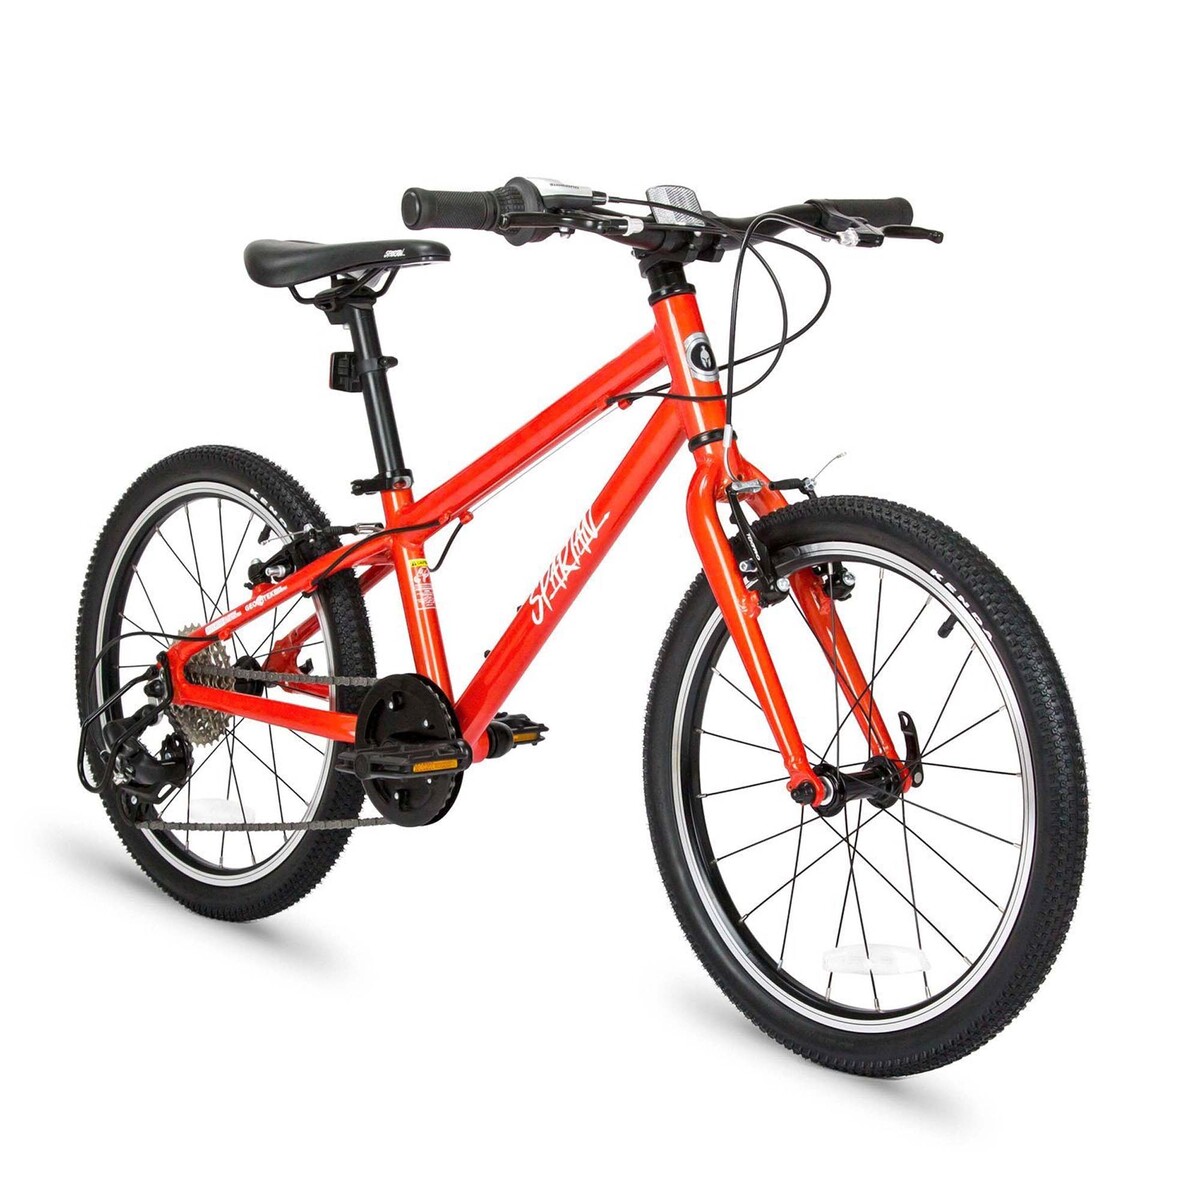 Spartan 24 inches Hyperlite Alloy Bicycle, Orange, SP-3144